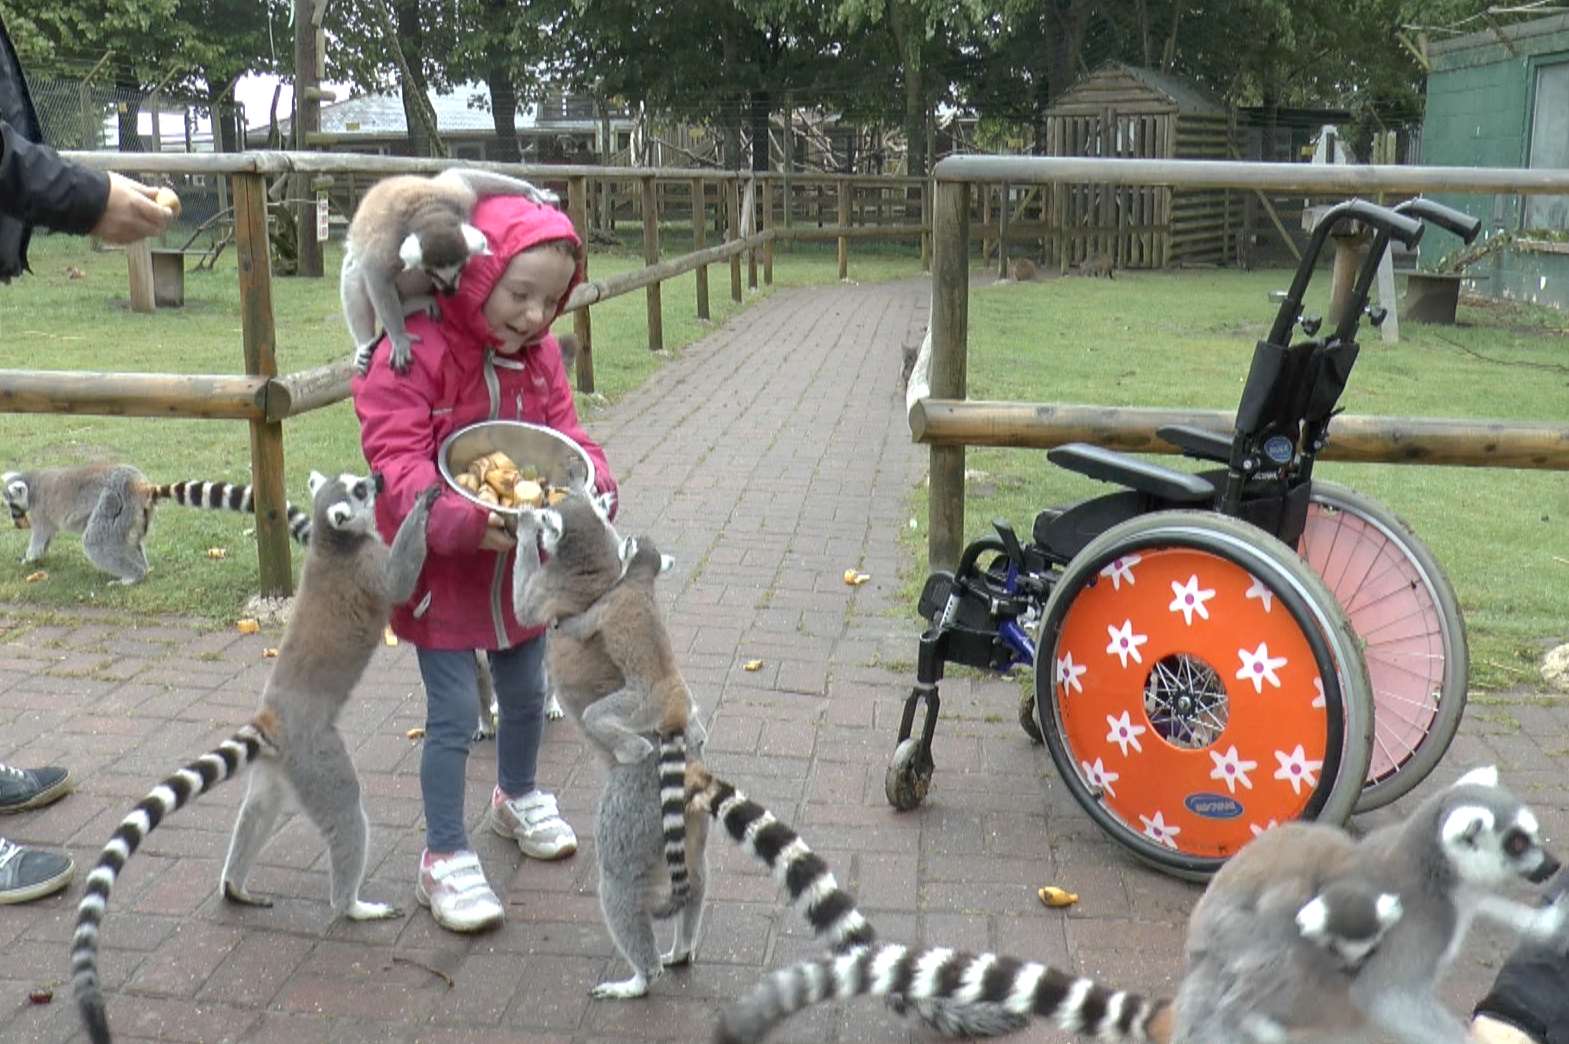 Ffion gave the lemurs some food